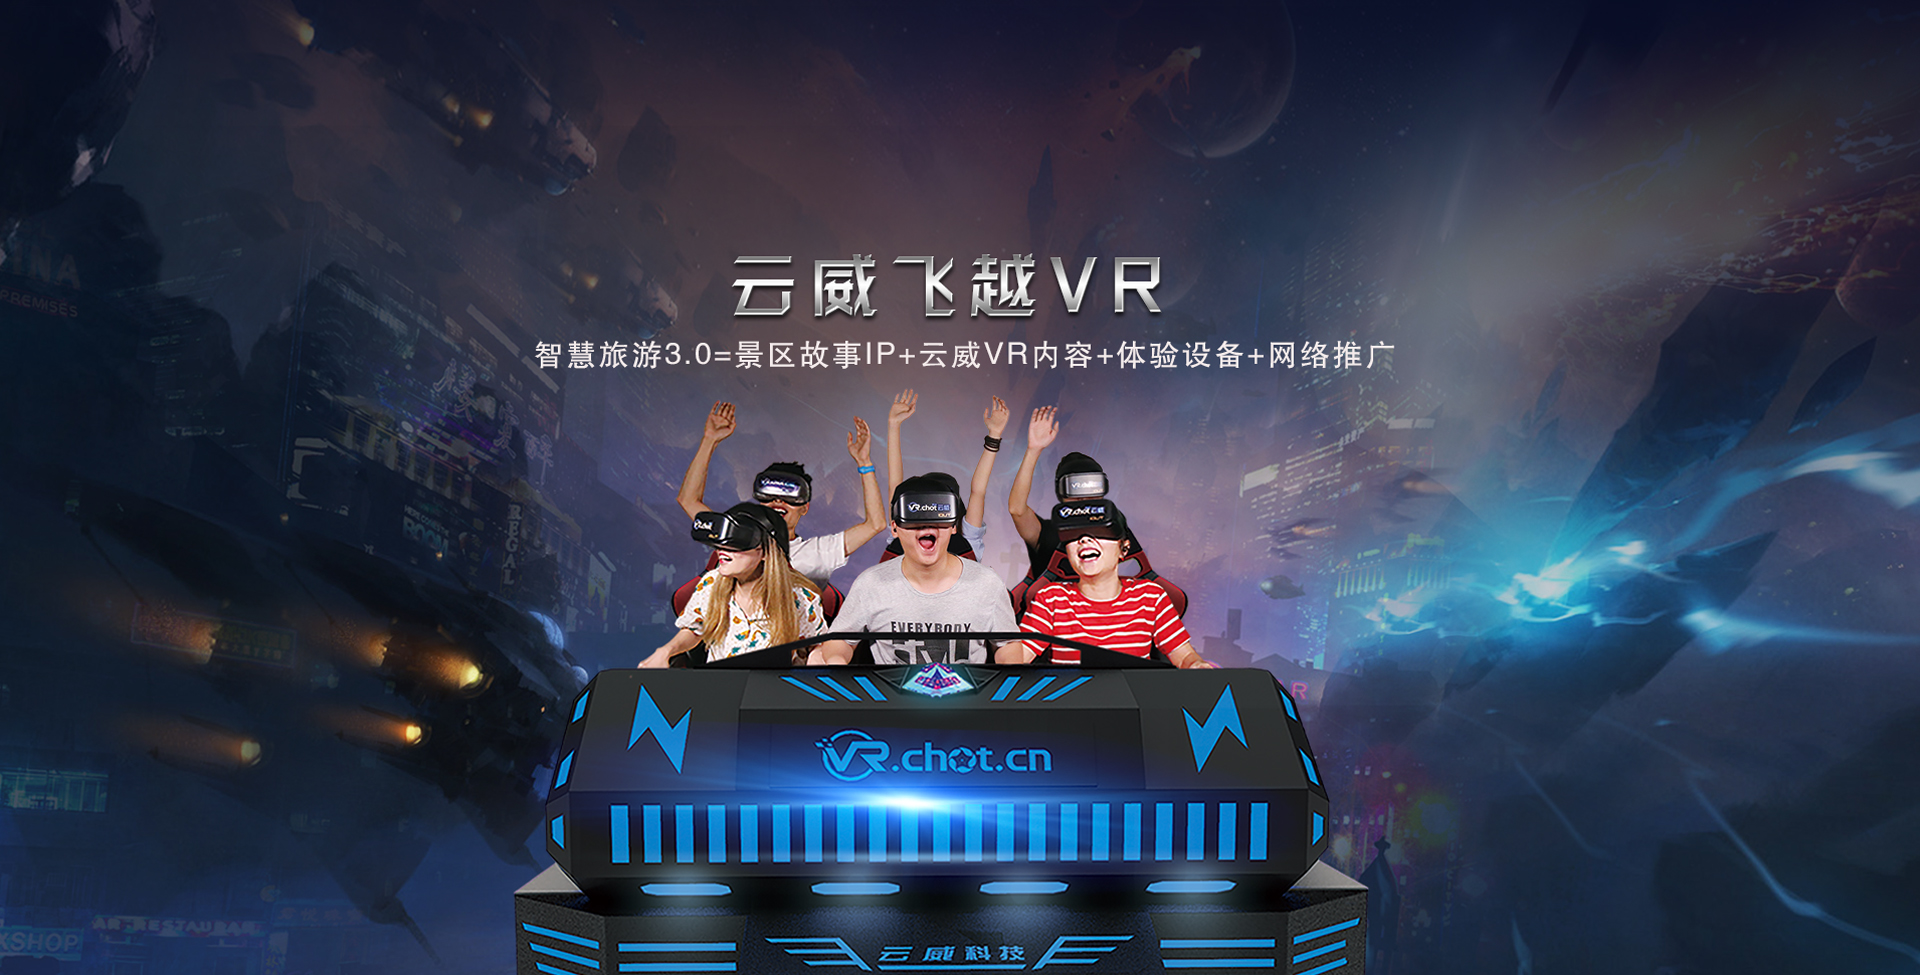  云威VR 飞越解放碑VR  VR行业应用  VR厂商  VR硬件  VR软件  VR智慧旅游